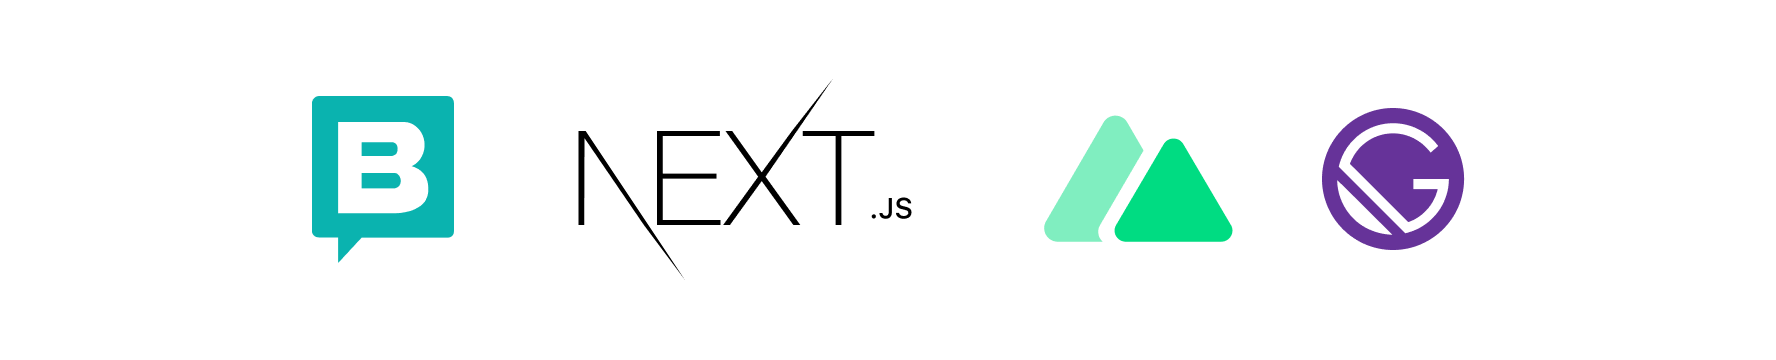 Storyblok Logo